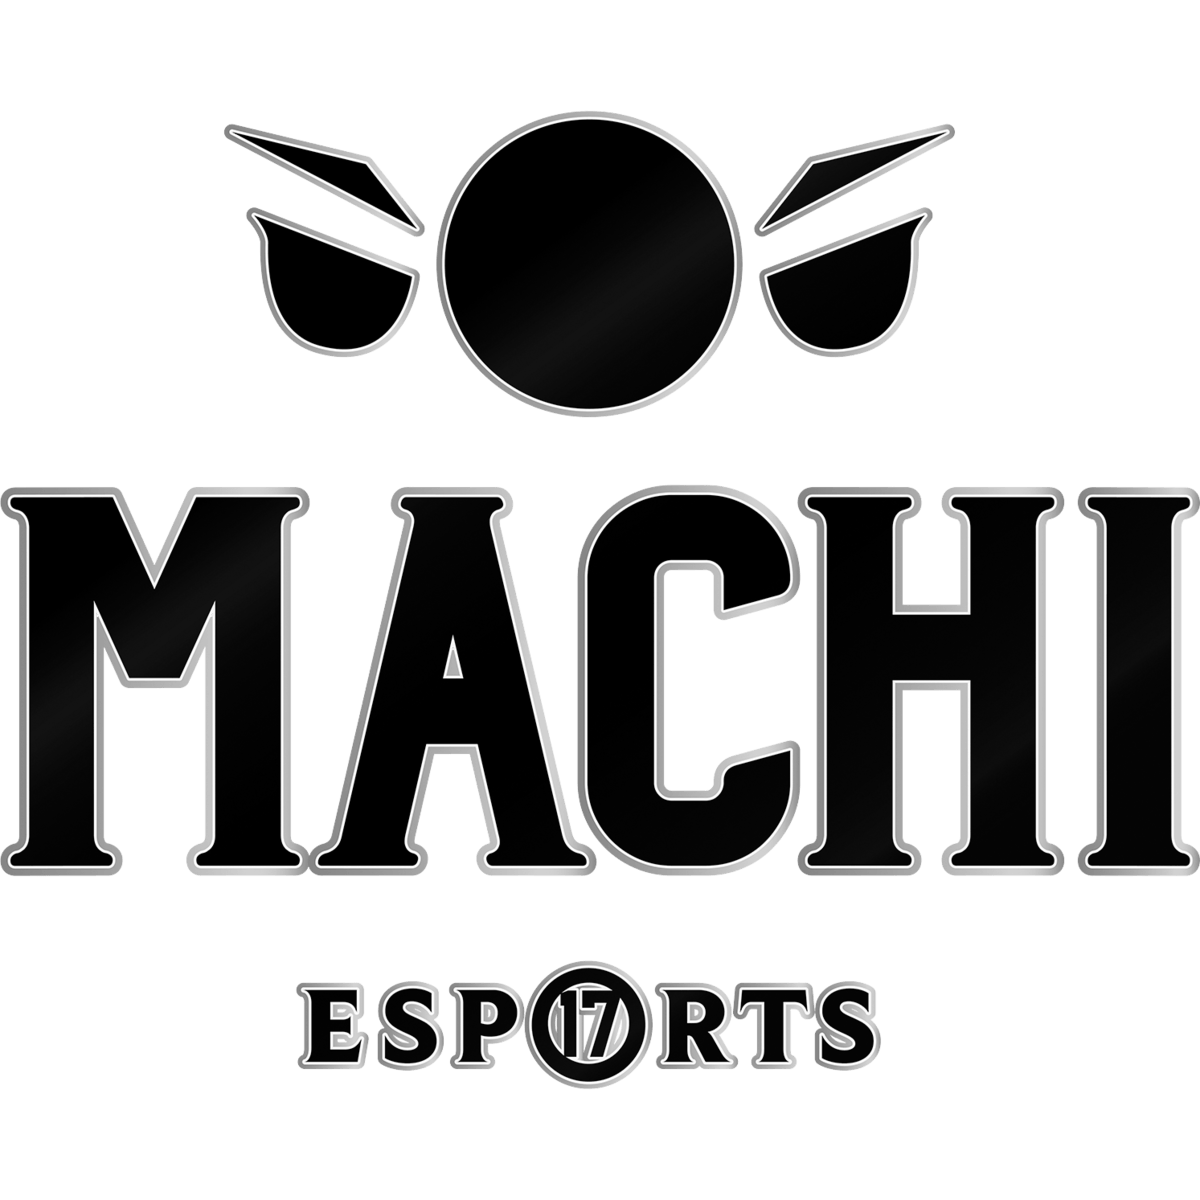 Black Square Sports Logo - Machi E Sports. League Of Legends Esports